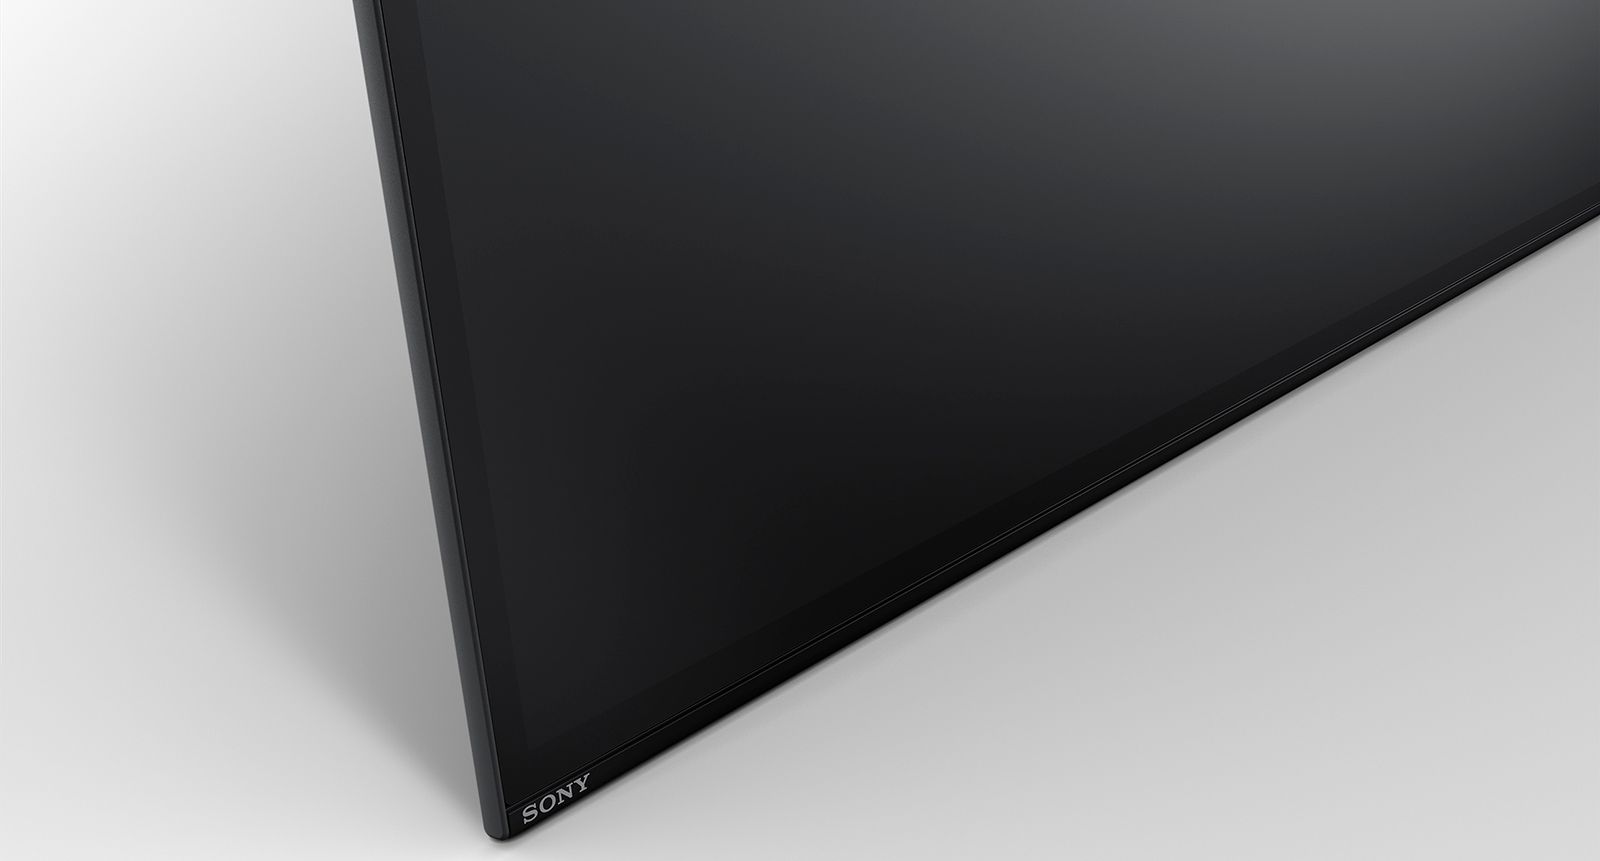 Sony A1 Bravia OLED 4K TV image 4